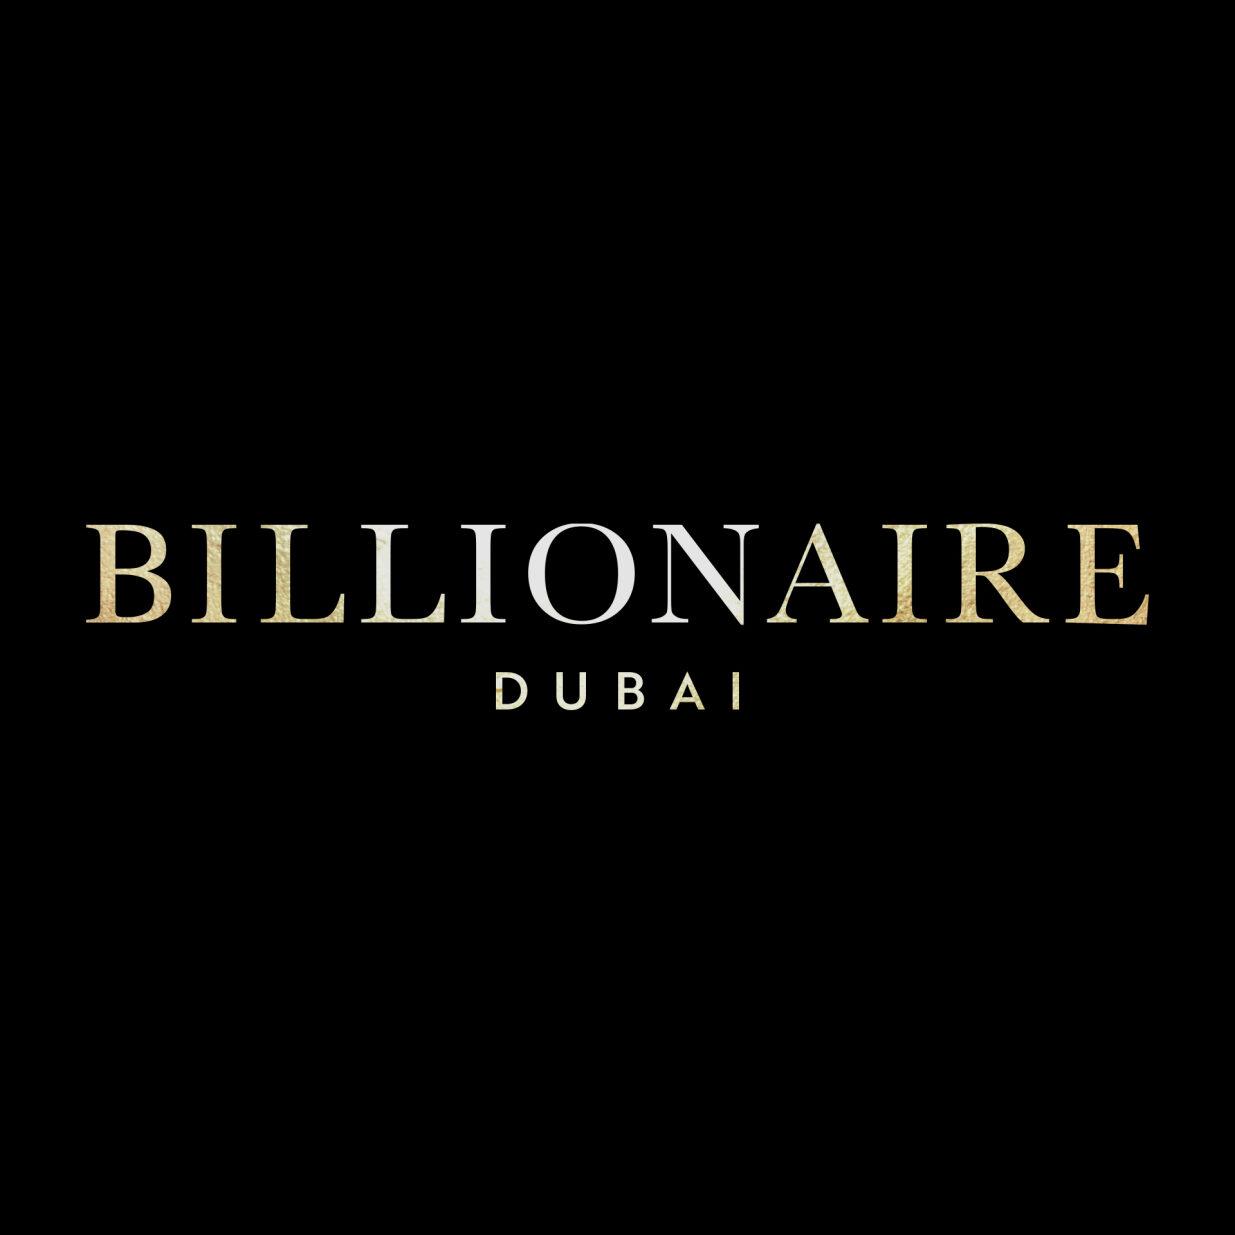 The Billionaire Grand Show - Every Night